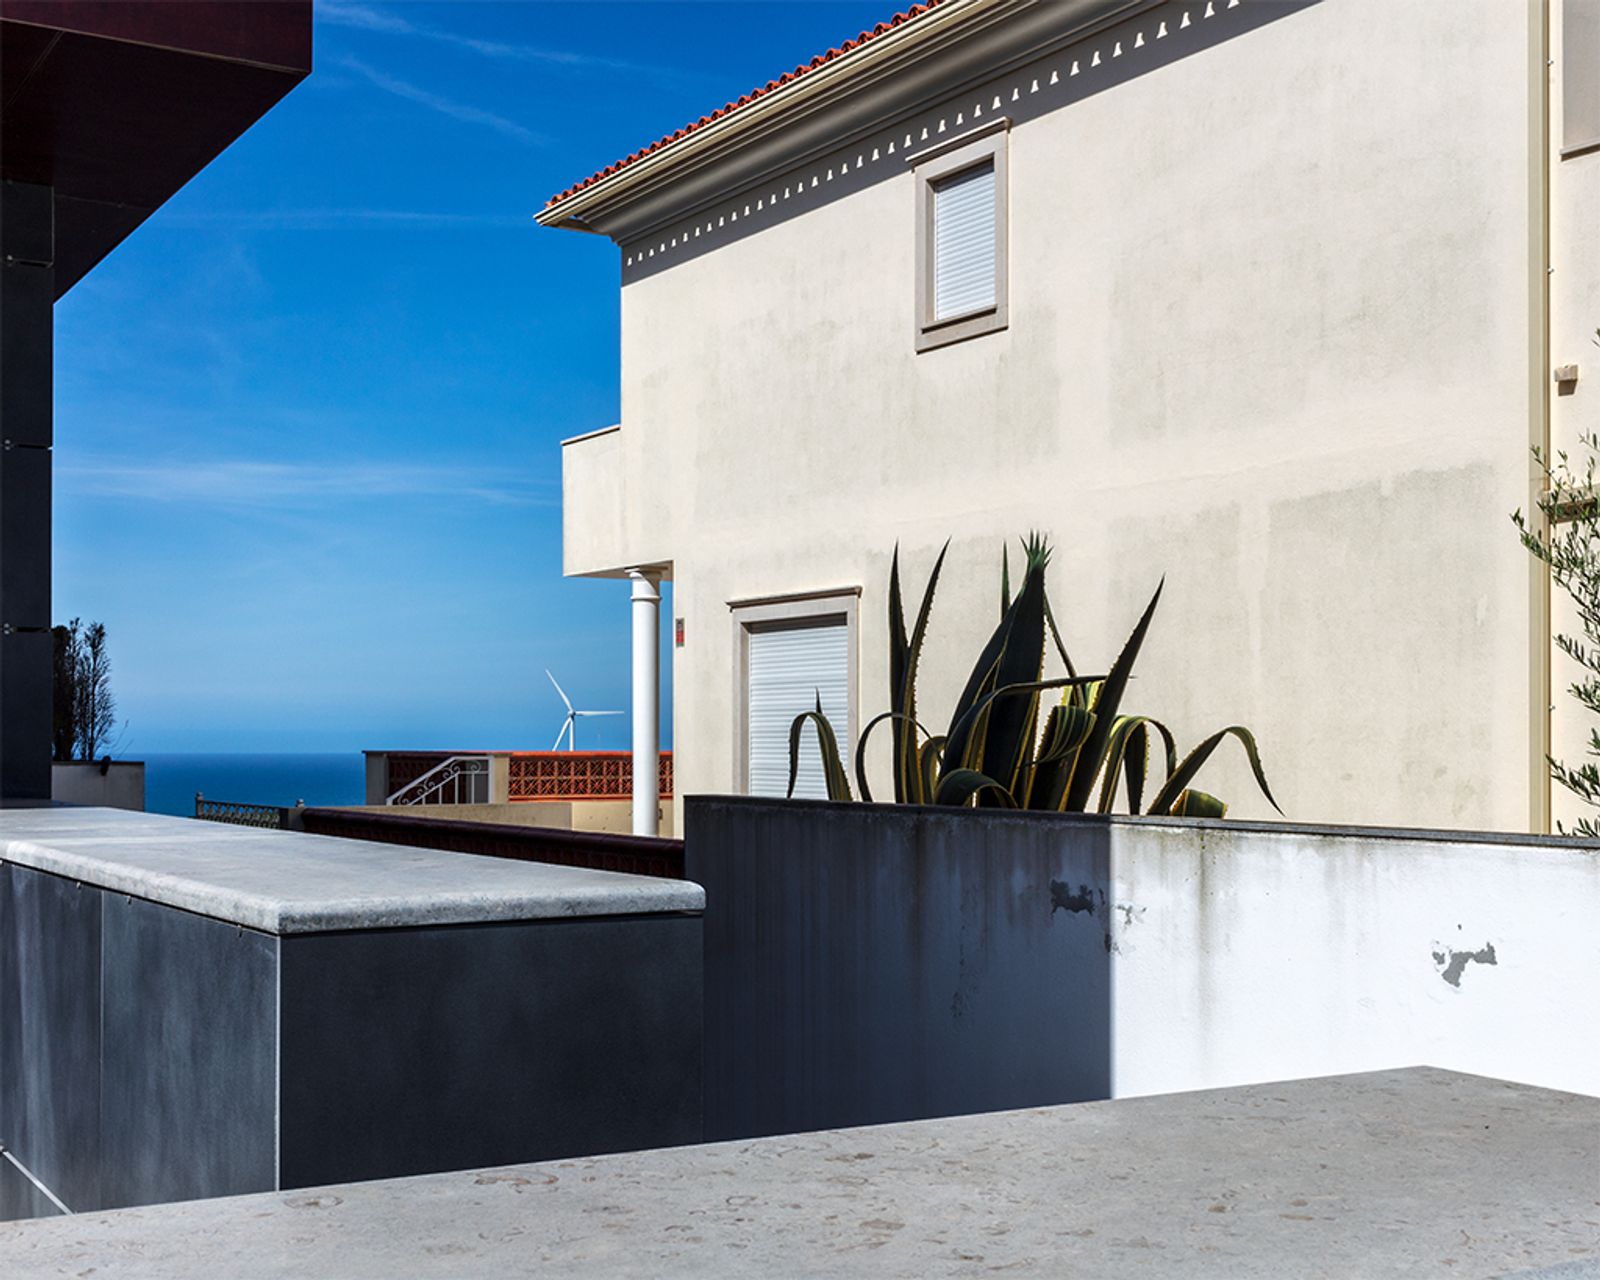 © Bryan Steiff - Vacation Houses, Nazaré, Portugal, 2019